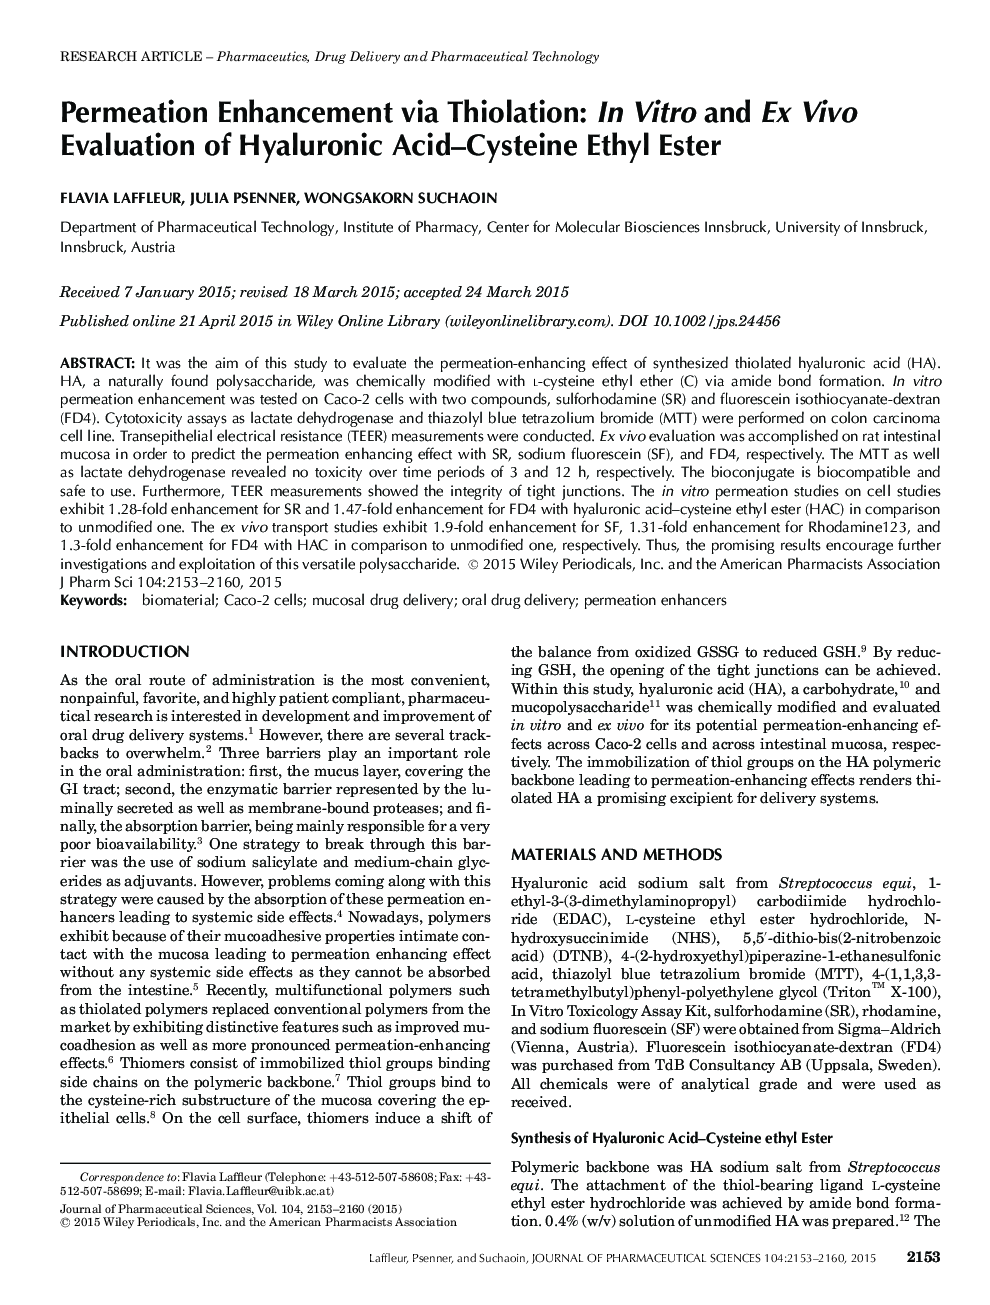 Permeation Enhancement via Thiolation: In Vitro and Ex Vivo Evaluation of Hyaluronic Acid-Cysteine Ethyl Ester